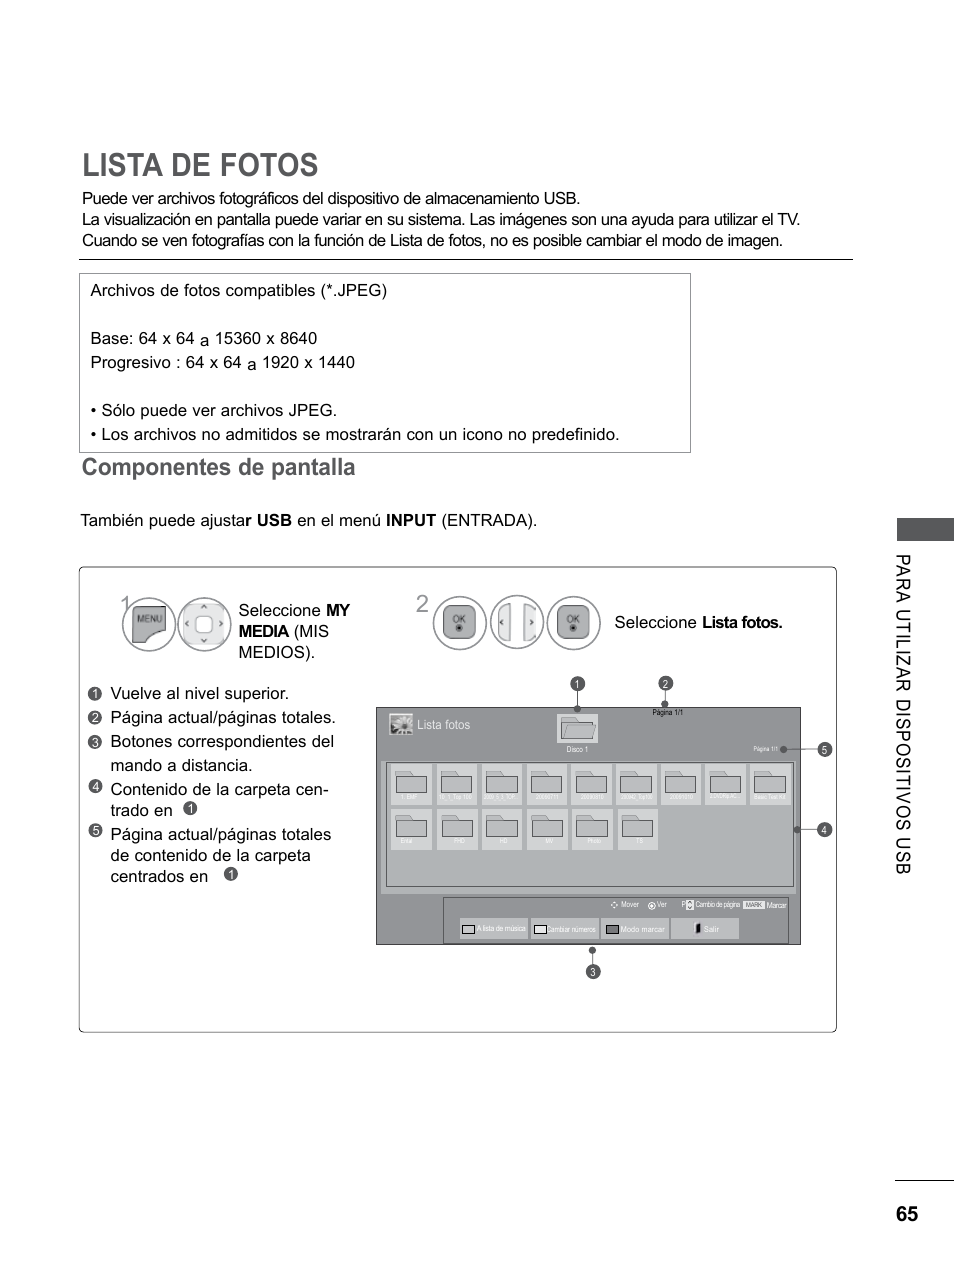 Lista de fotos, Componentes de pantalla | LG 55LE5300 Manual del usuario | Página 113 / 206